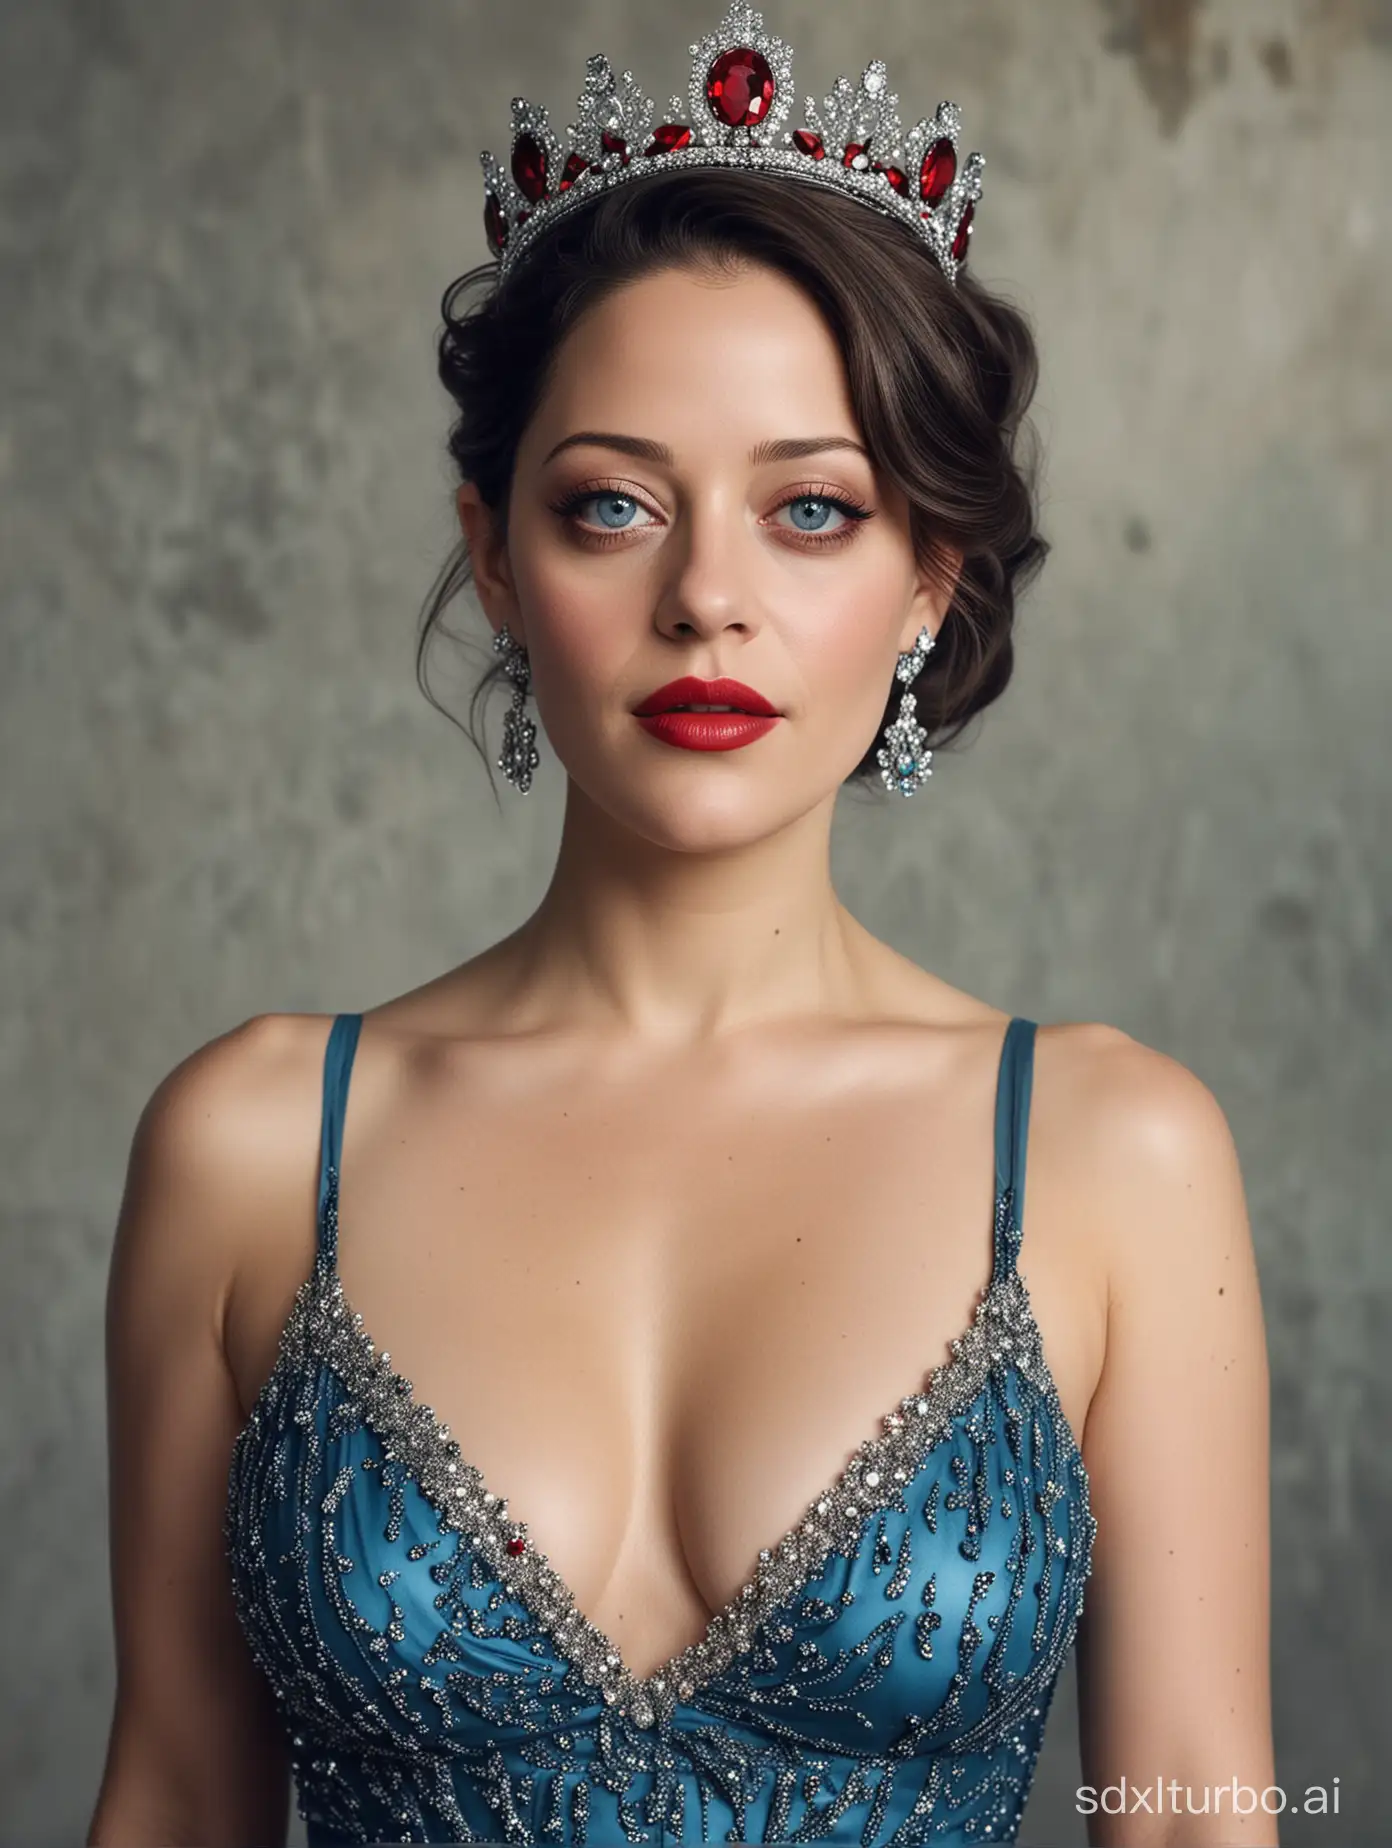 Elegant-Actress-Marion-Cotillard-in-Blue-Dress-with-Diamond-Crown